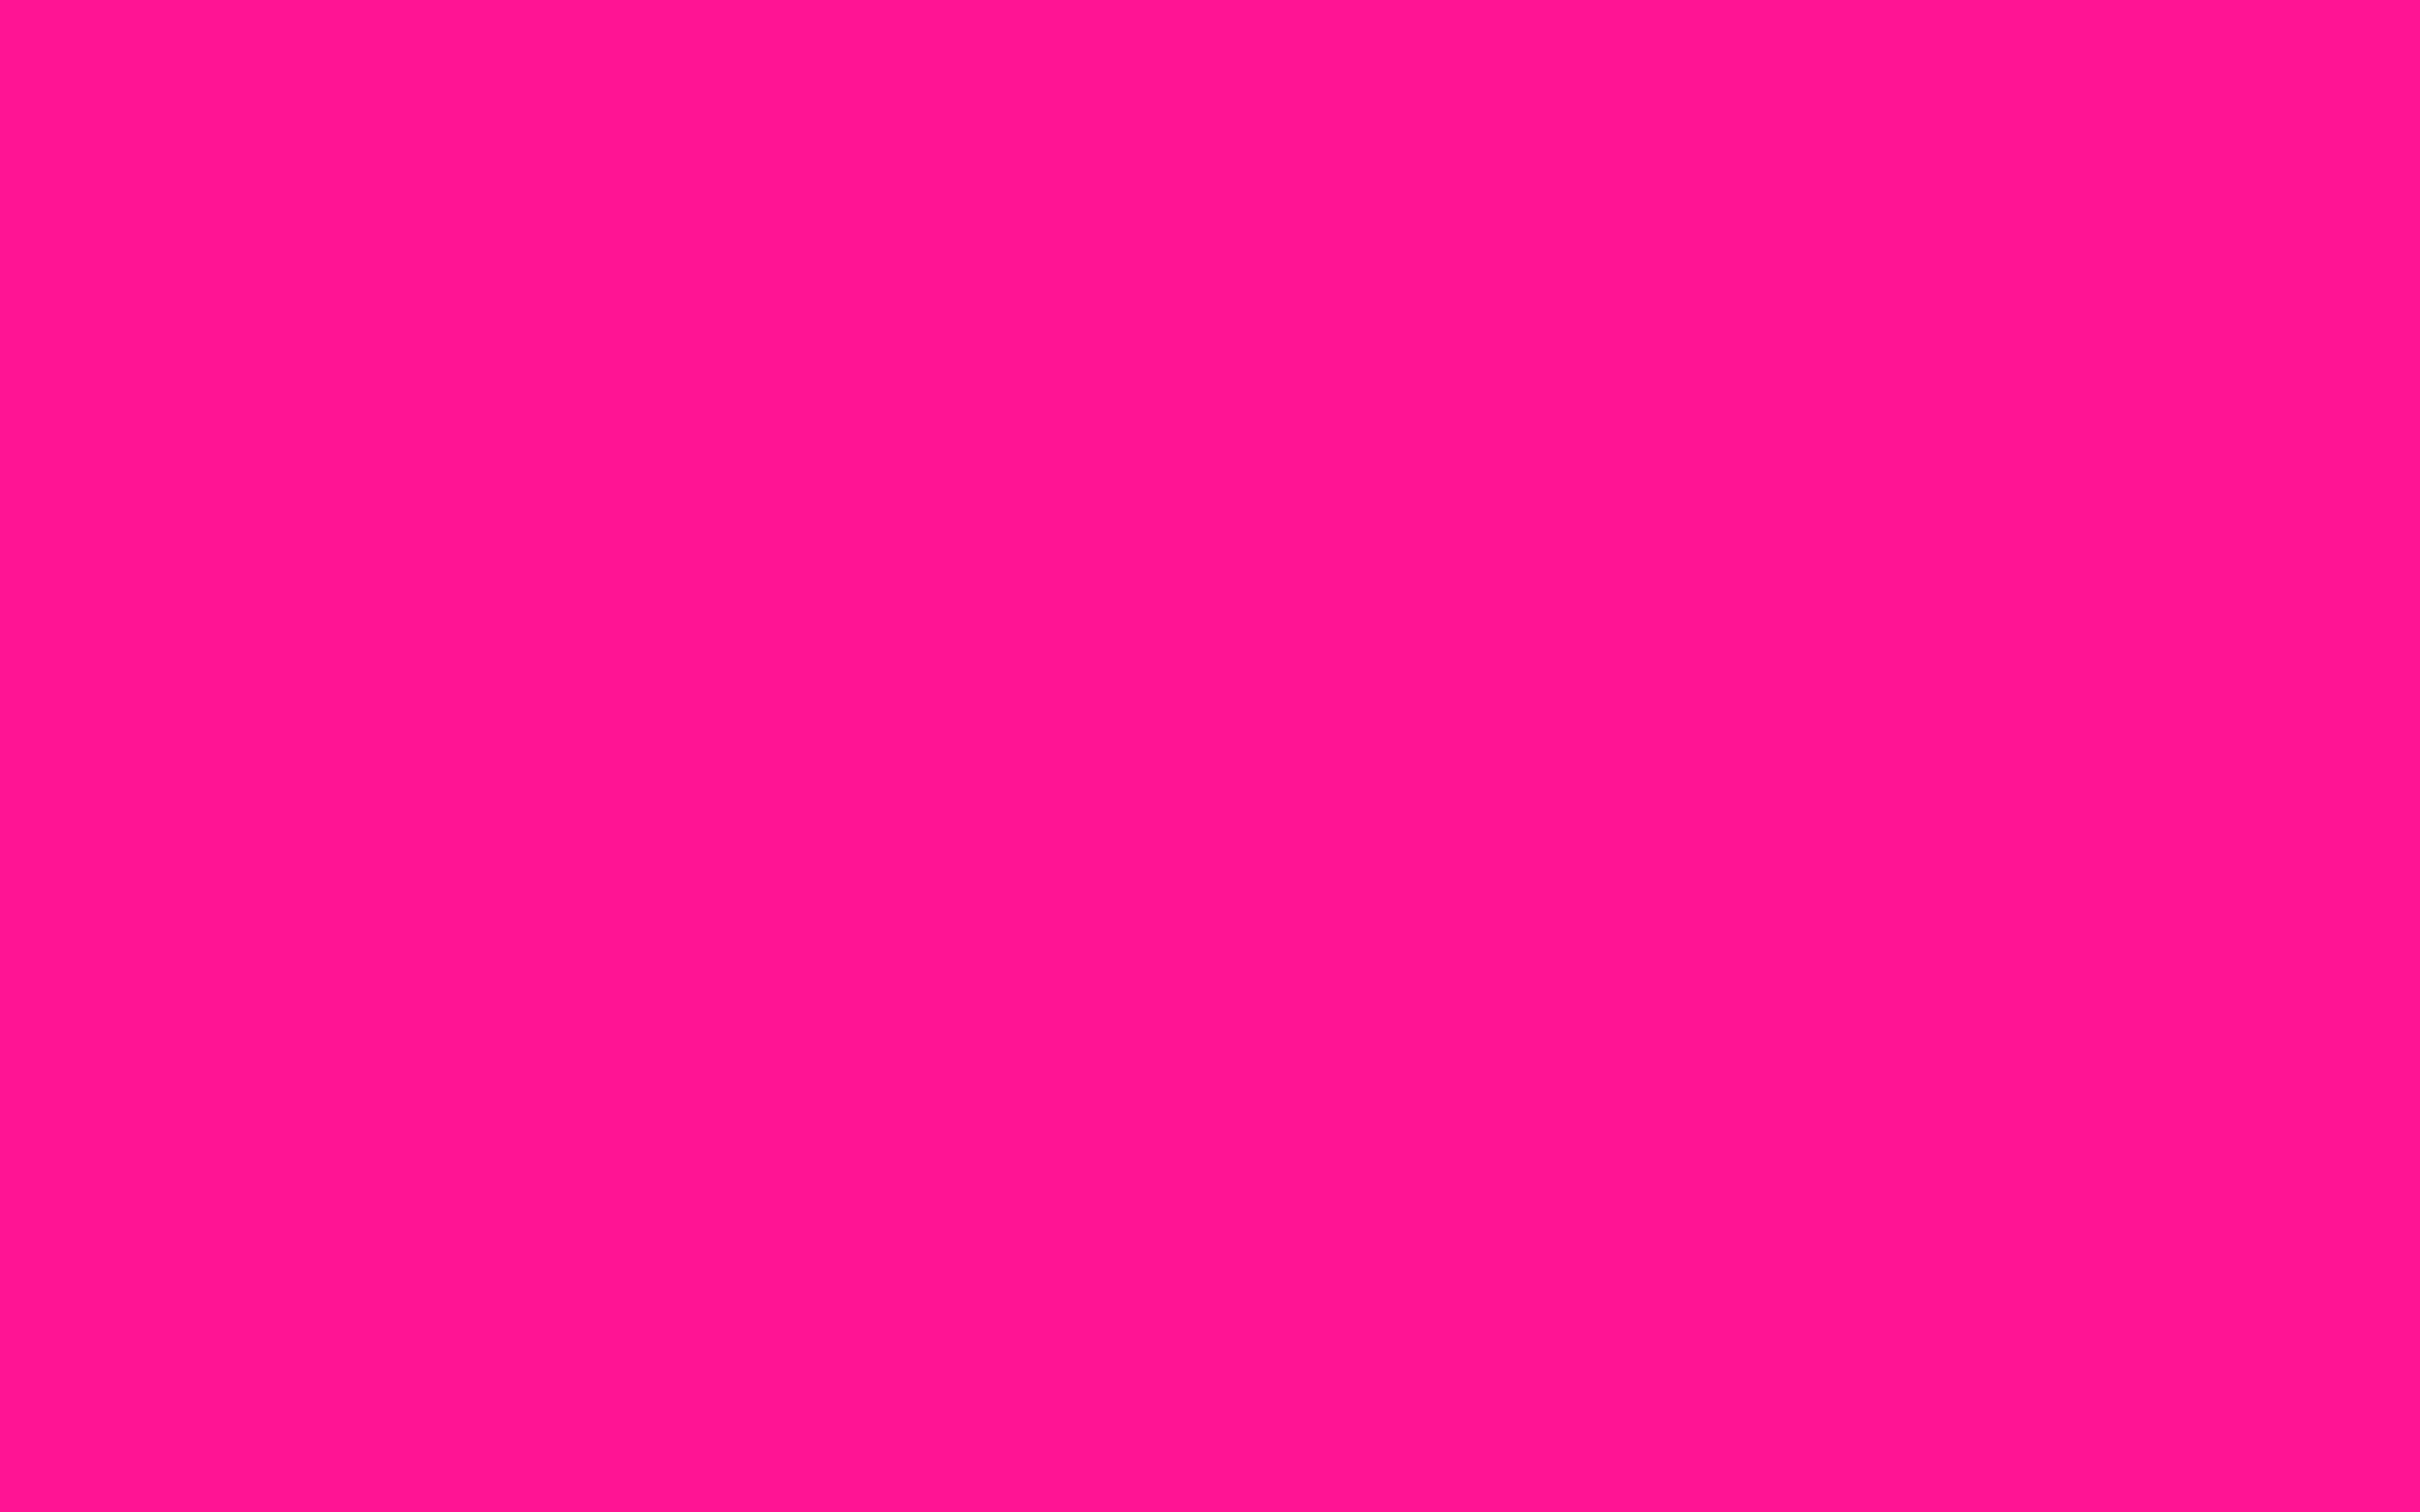 Paling Keren 10 Wallpaper  Warna  Pink  Tua Richa Wallpaper 